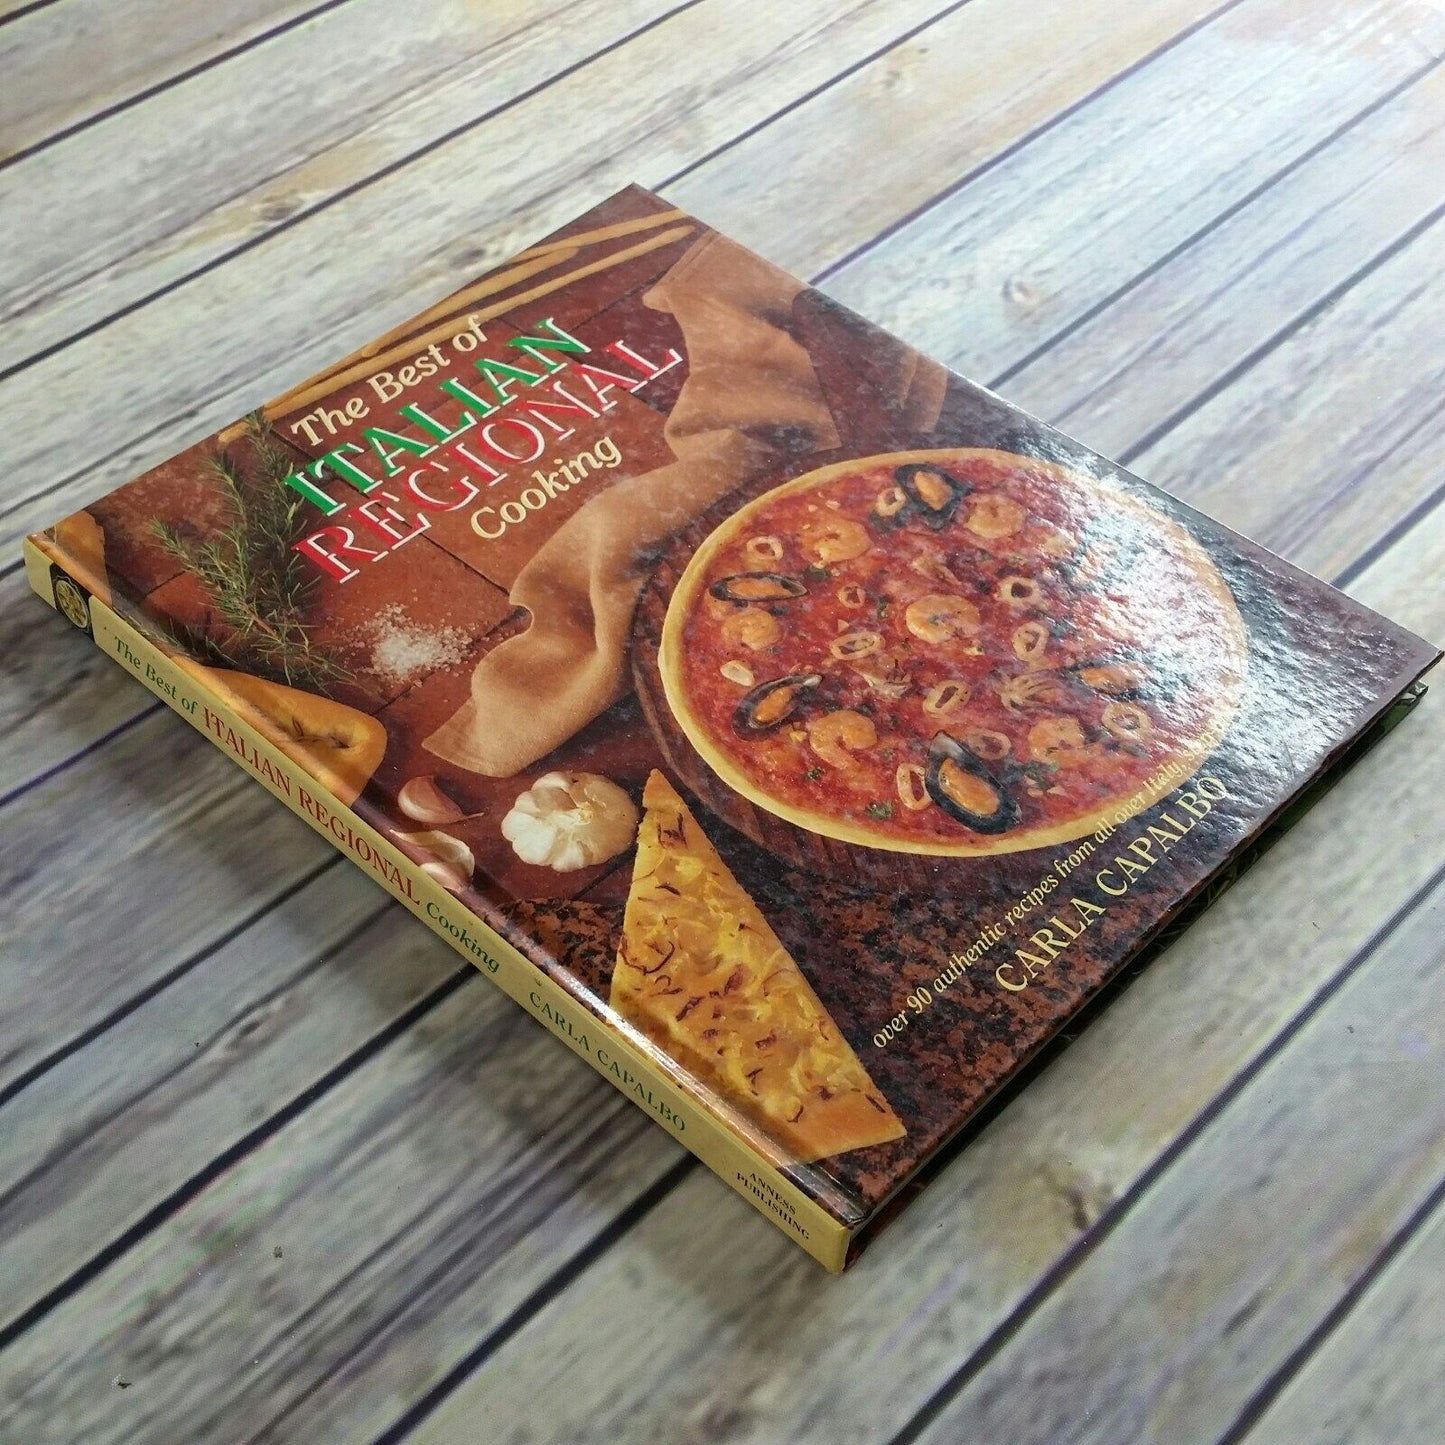 Vintage Italian Cookbook The Best of Italian Regional Cooking Recipes Carla Capalbo 1995 Hardcover NO Dust Jacket